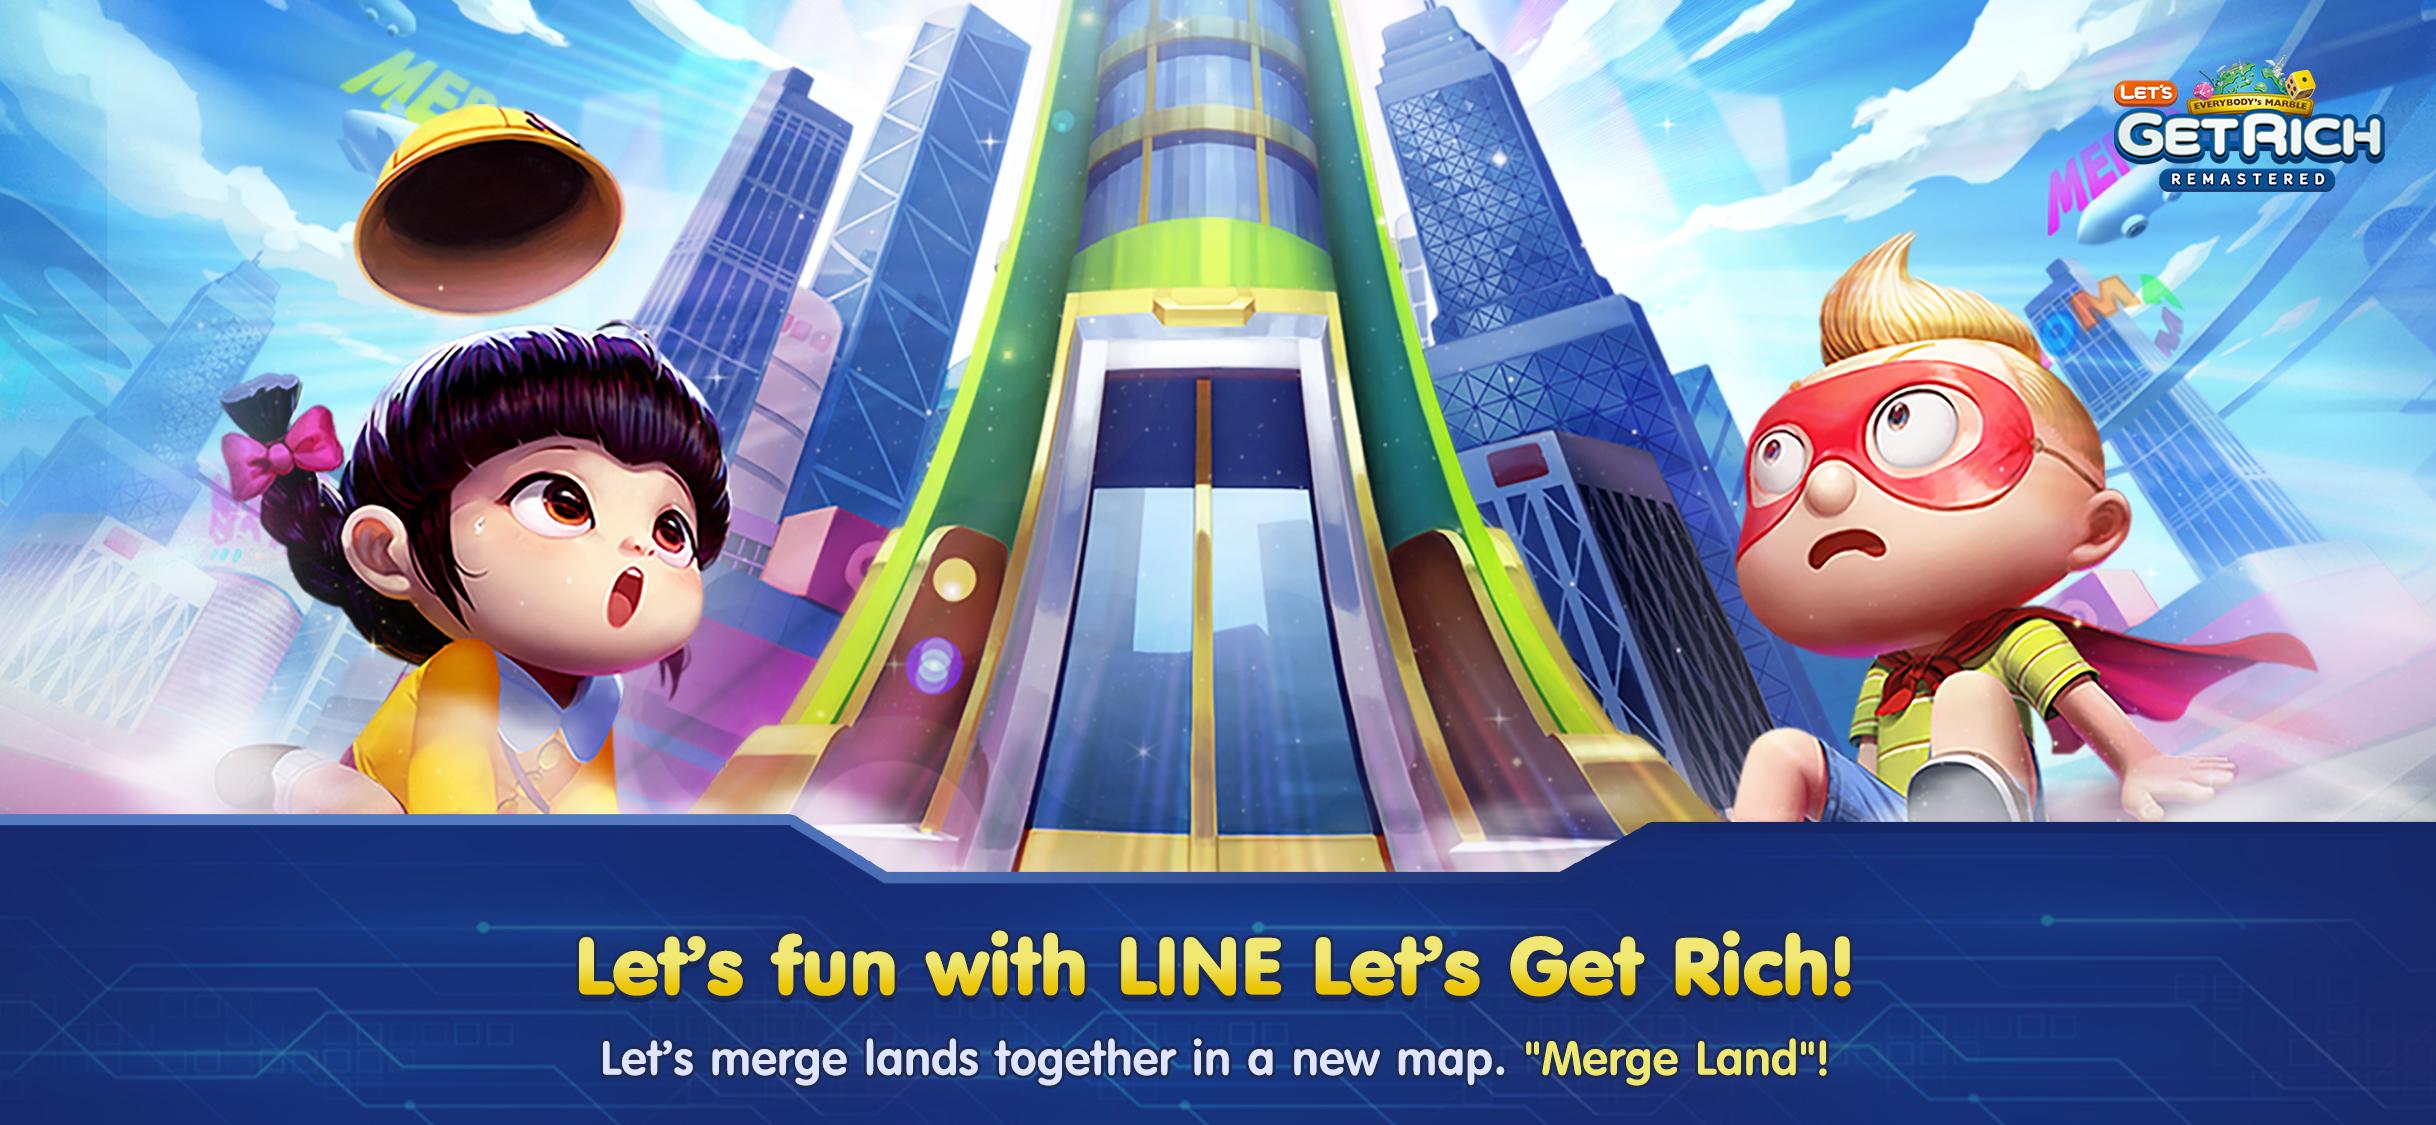 LINE Let's Get Rich 3.6.0 Screenshot 1